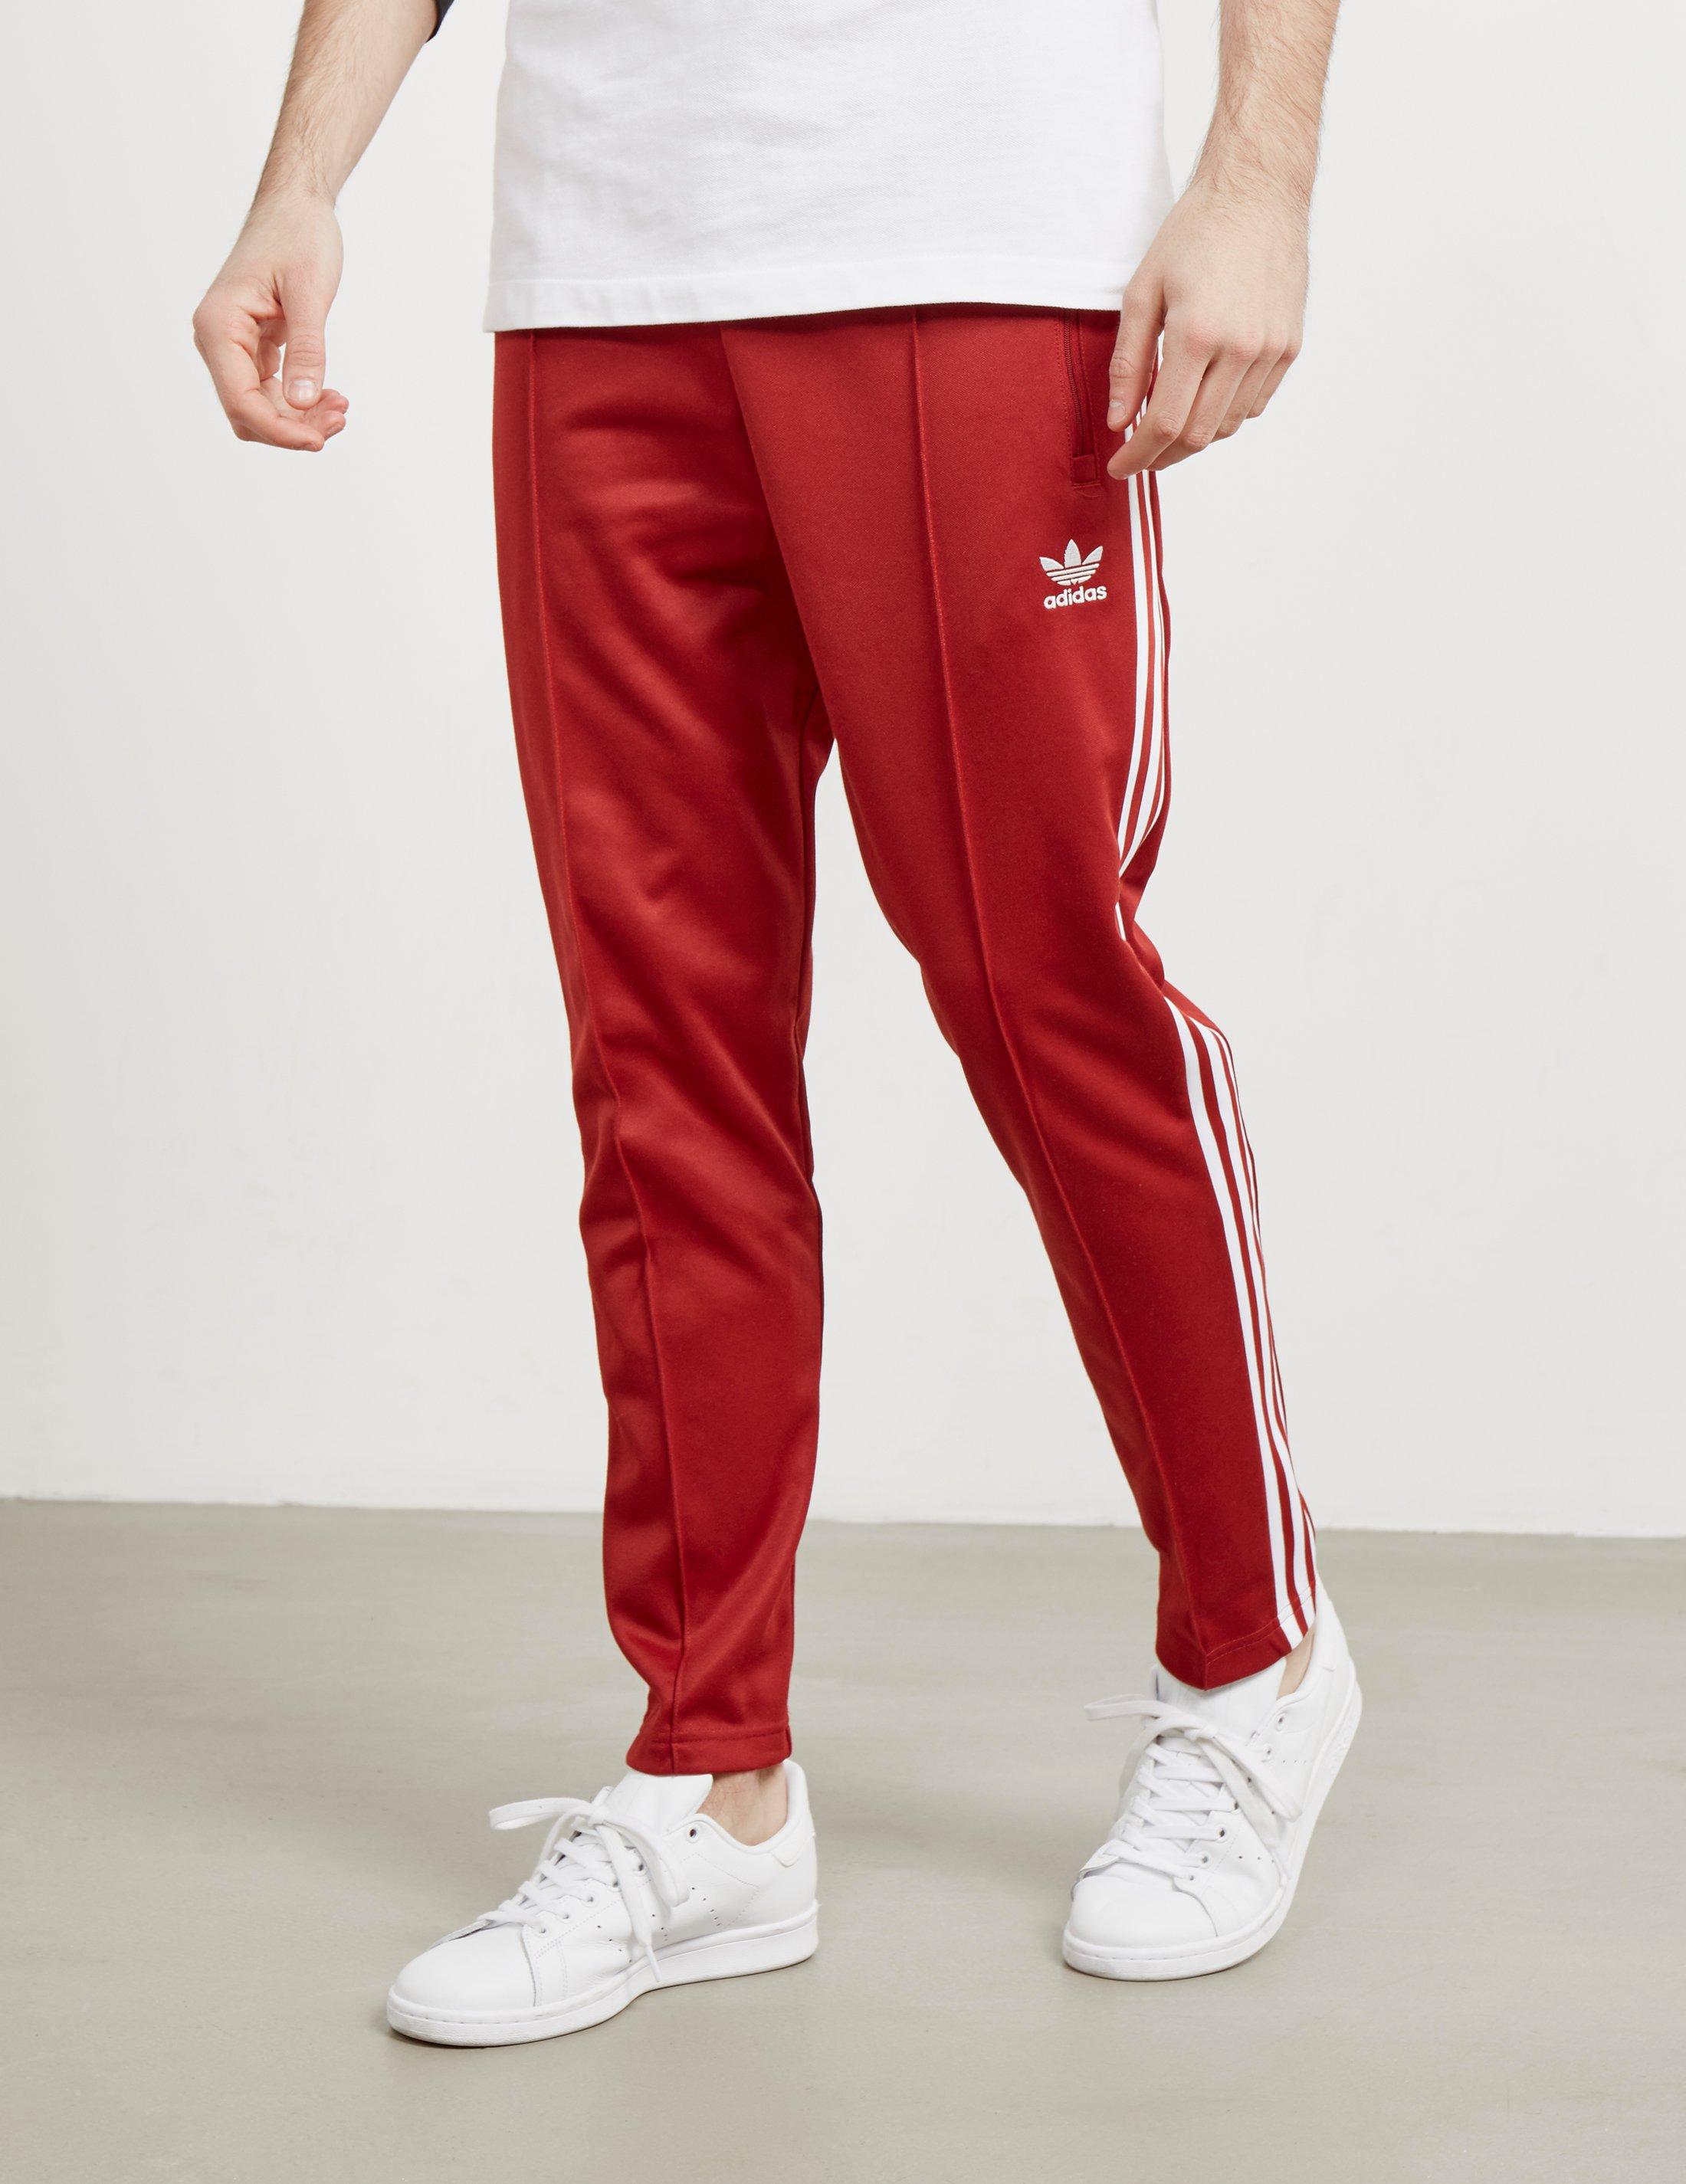 adidas Originals Kids Adicolor Superstar Track Pants Vivid RedWhite  Small  Amazonin Clothing  Accessories